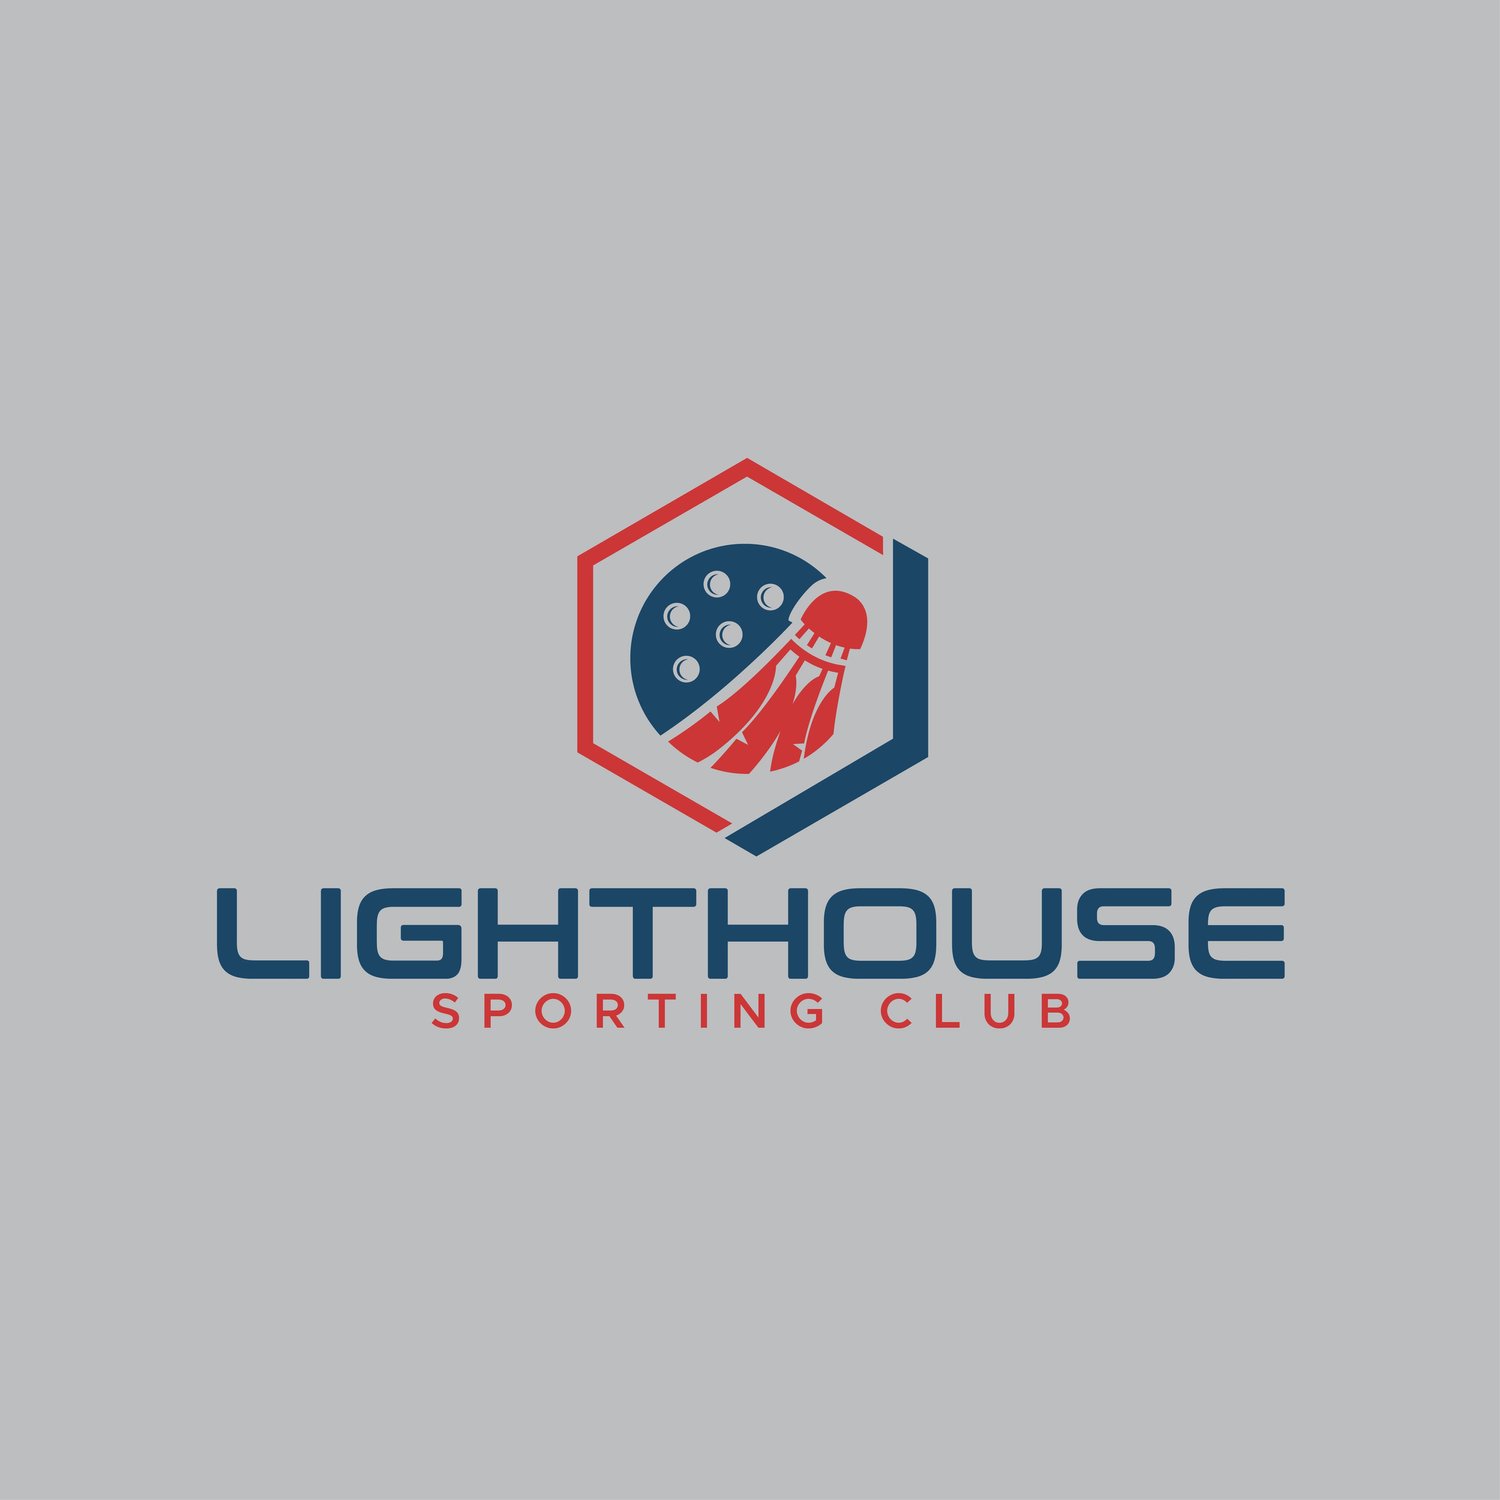 Lighthouse Sporting Club